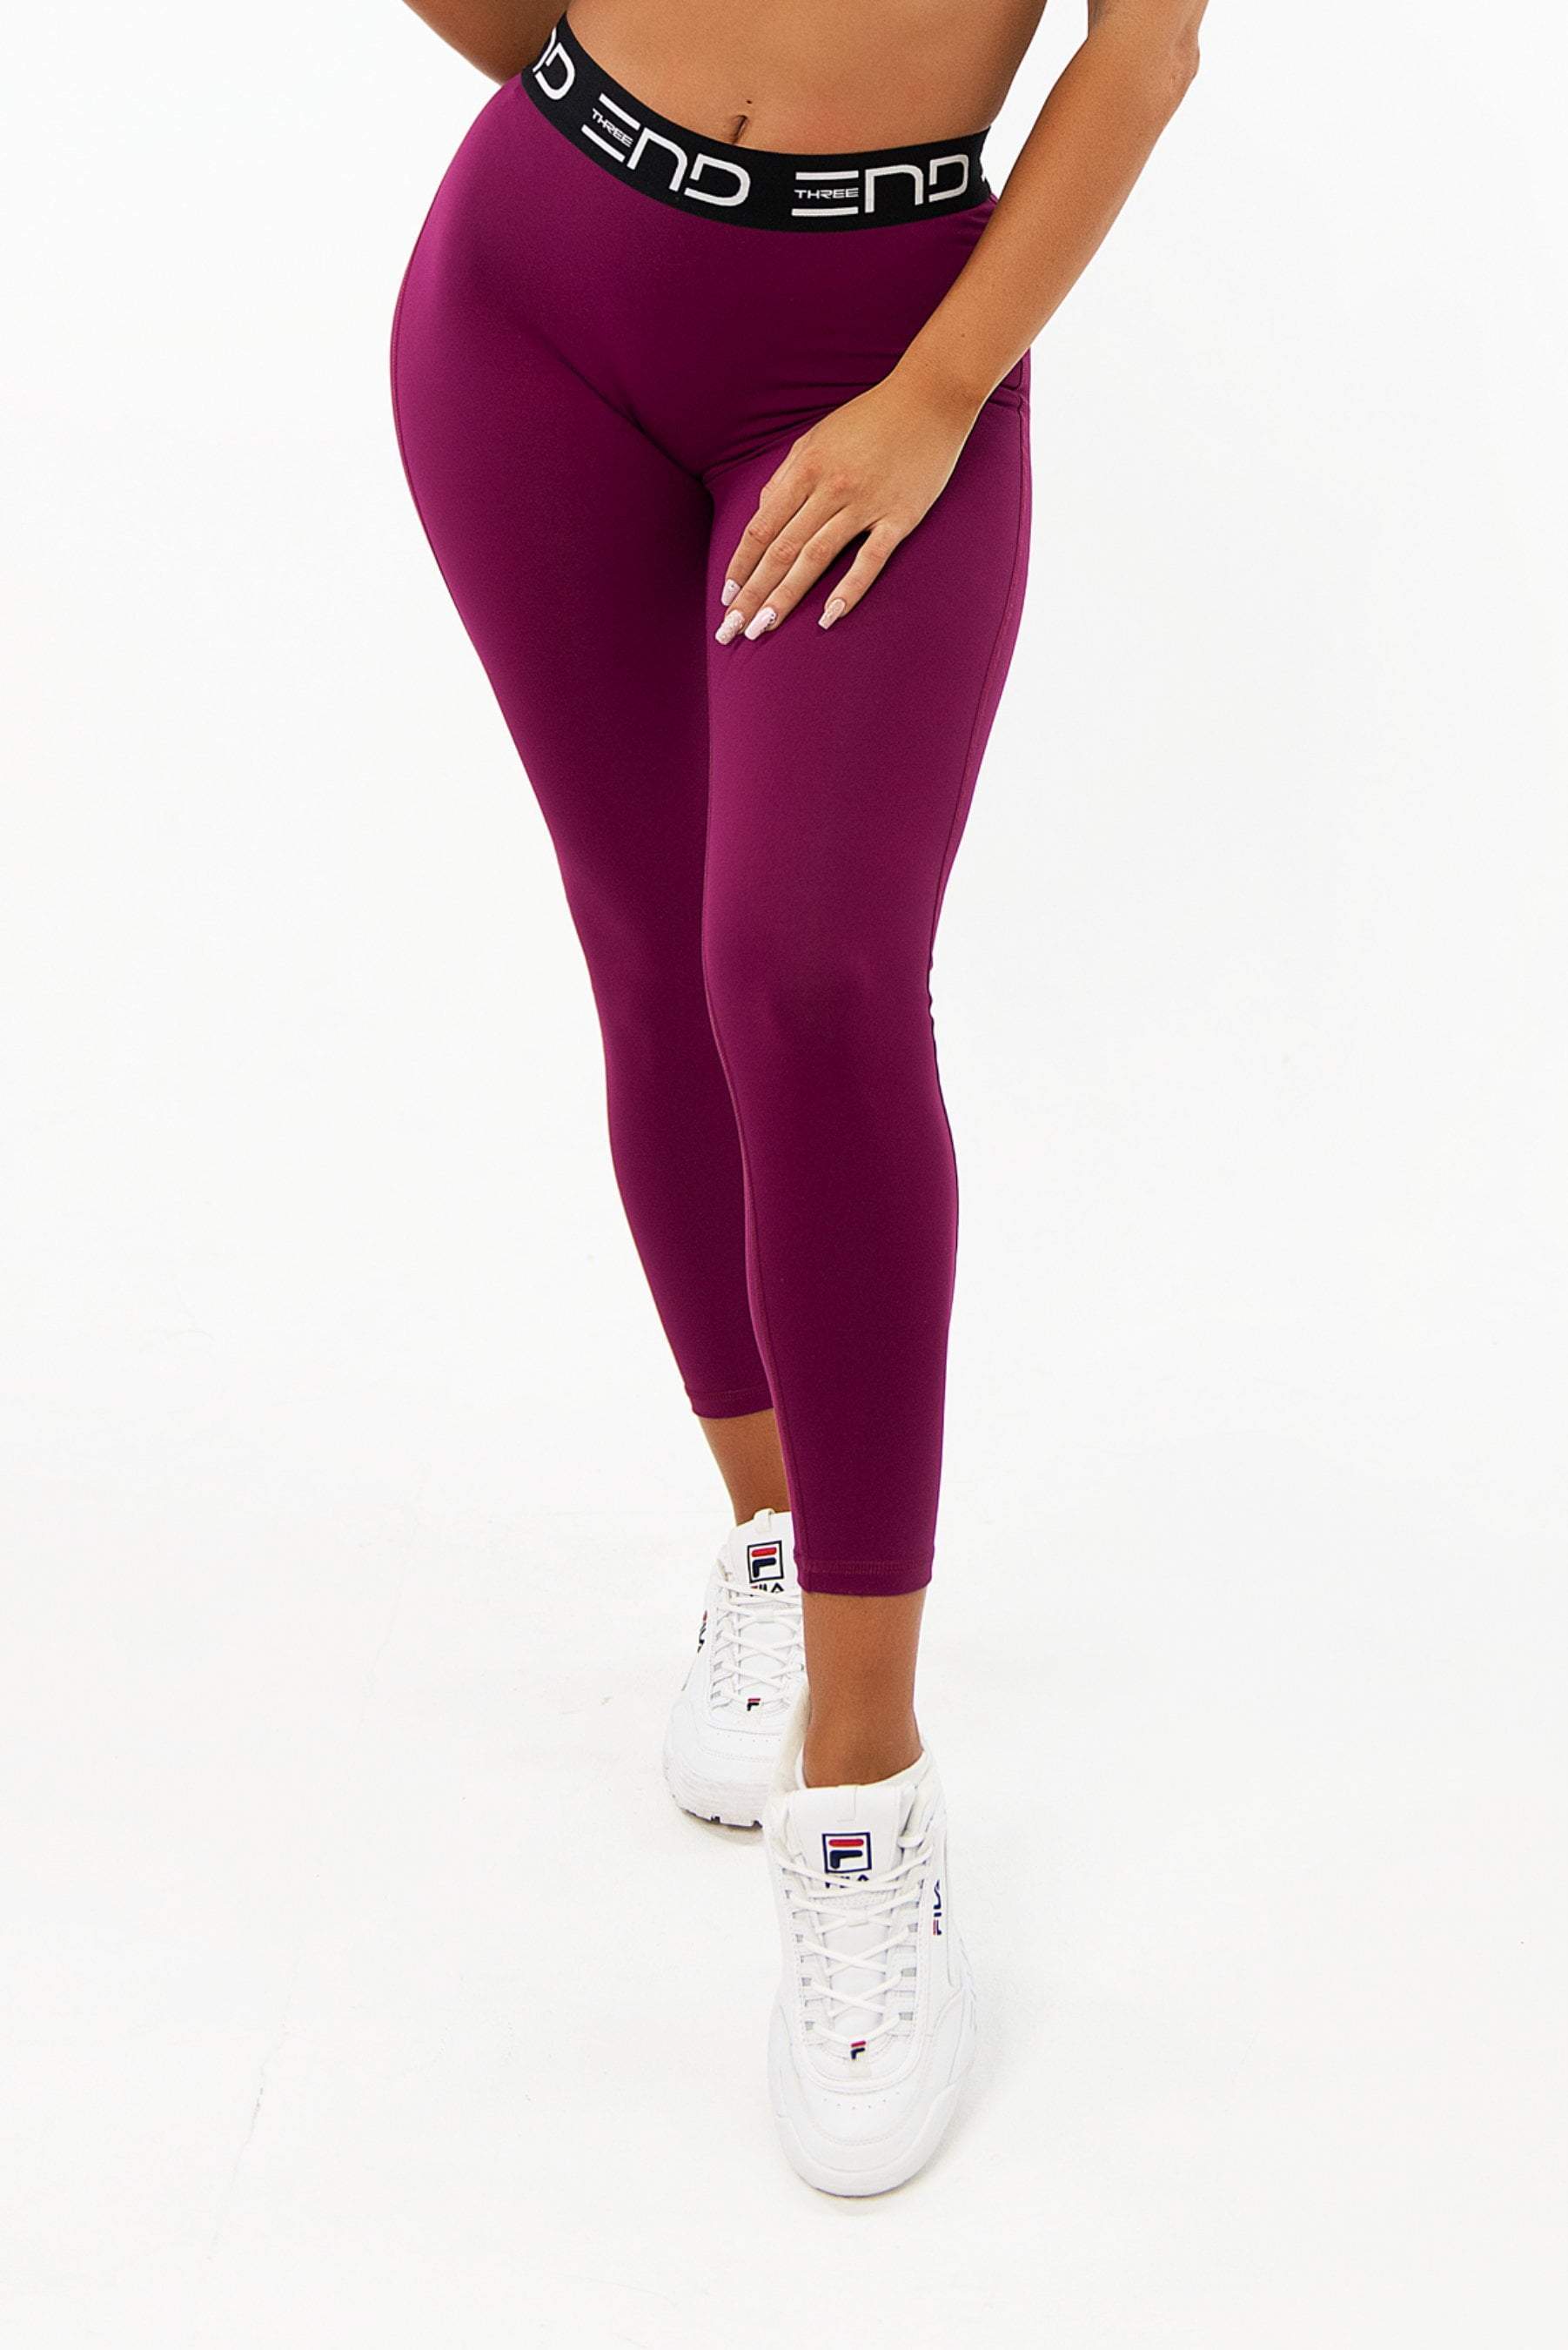 ECHT burgundy high rise seamless leggings size small activewear